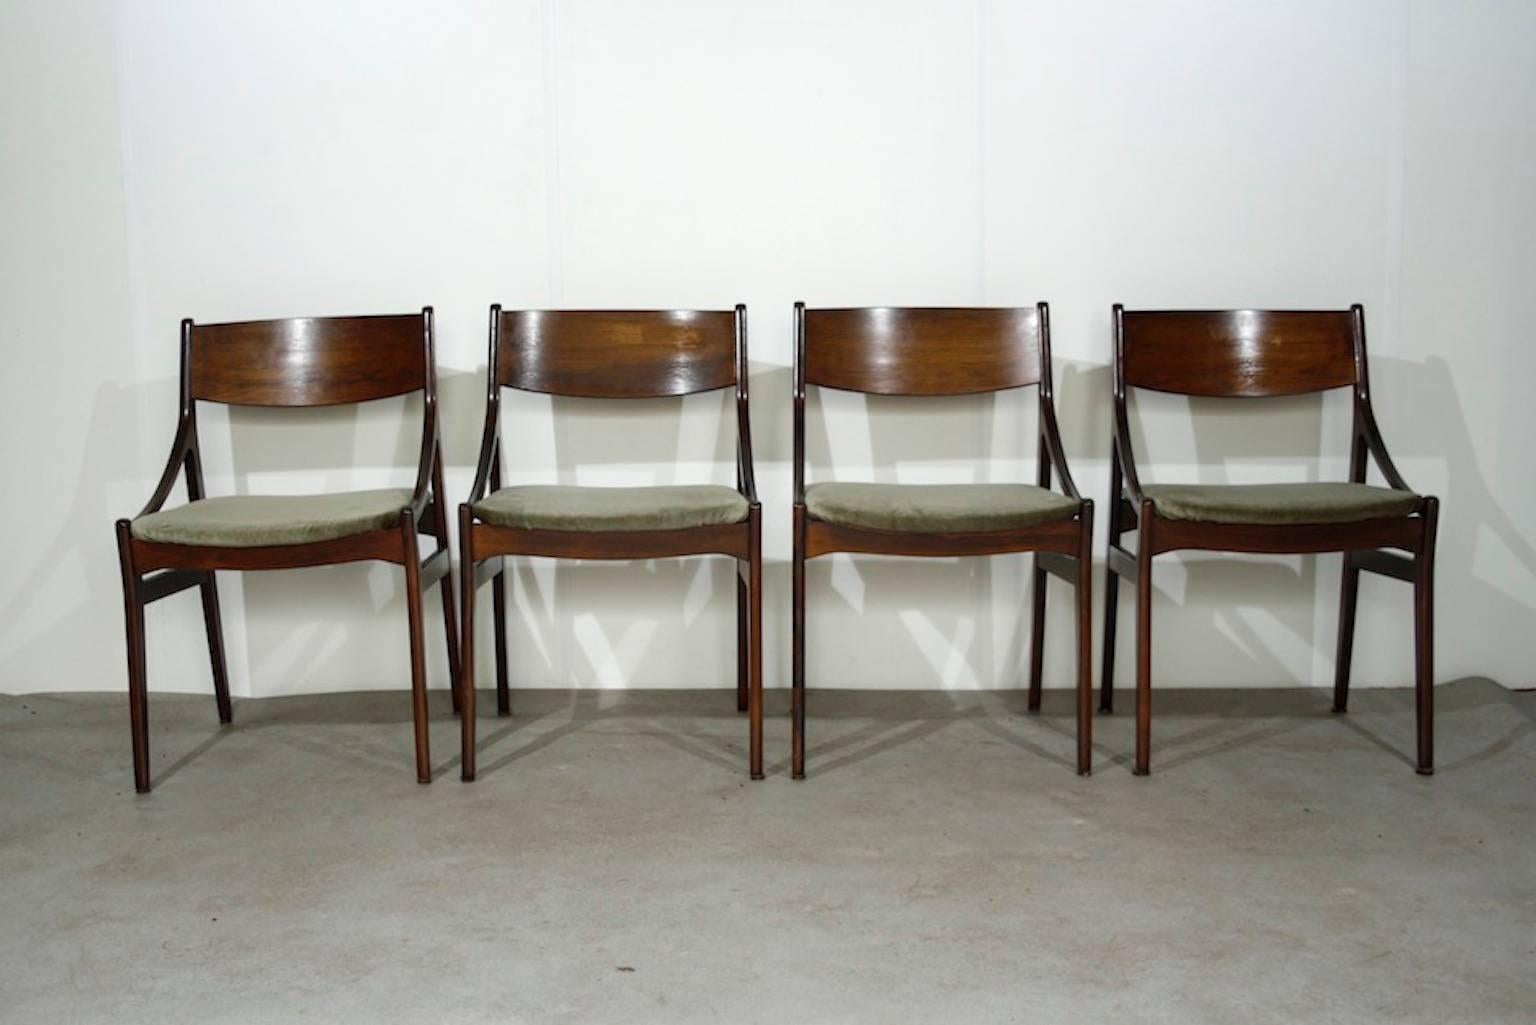 Scandinavian Modern Four Dining Chairs by Vestervig Erikson for Brdr Tromborg Lystrup, Denmark 1960s For Sale